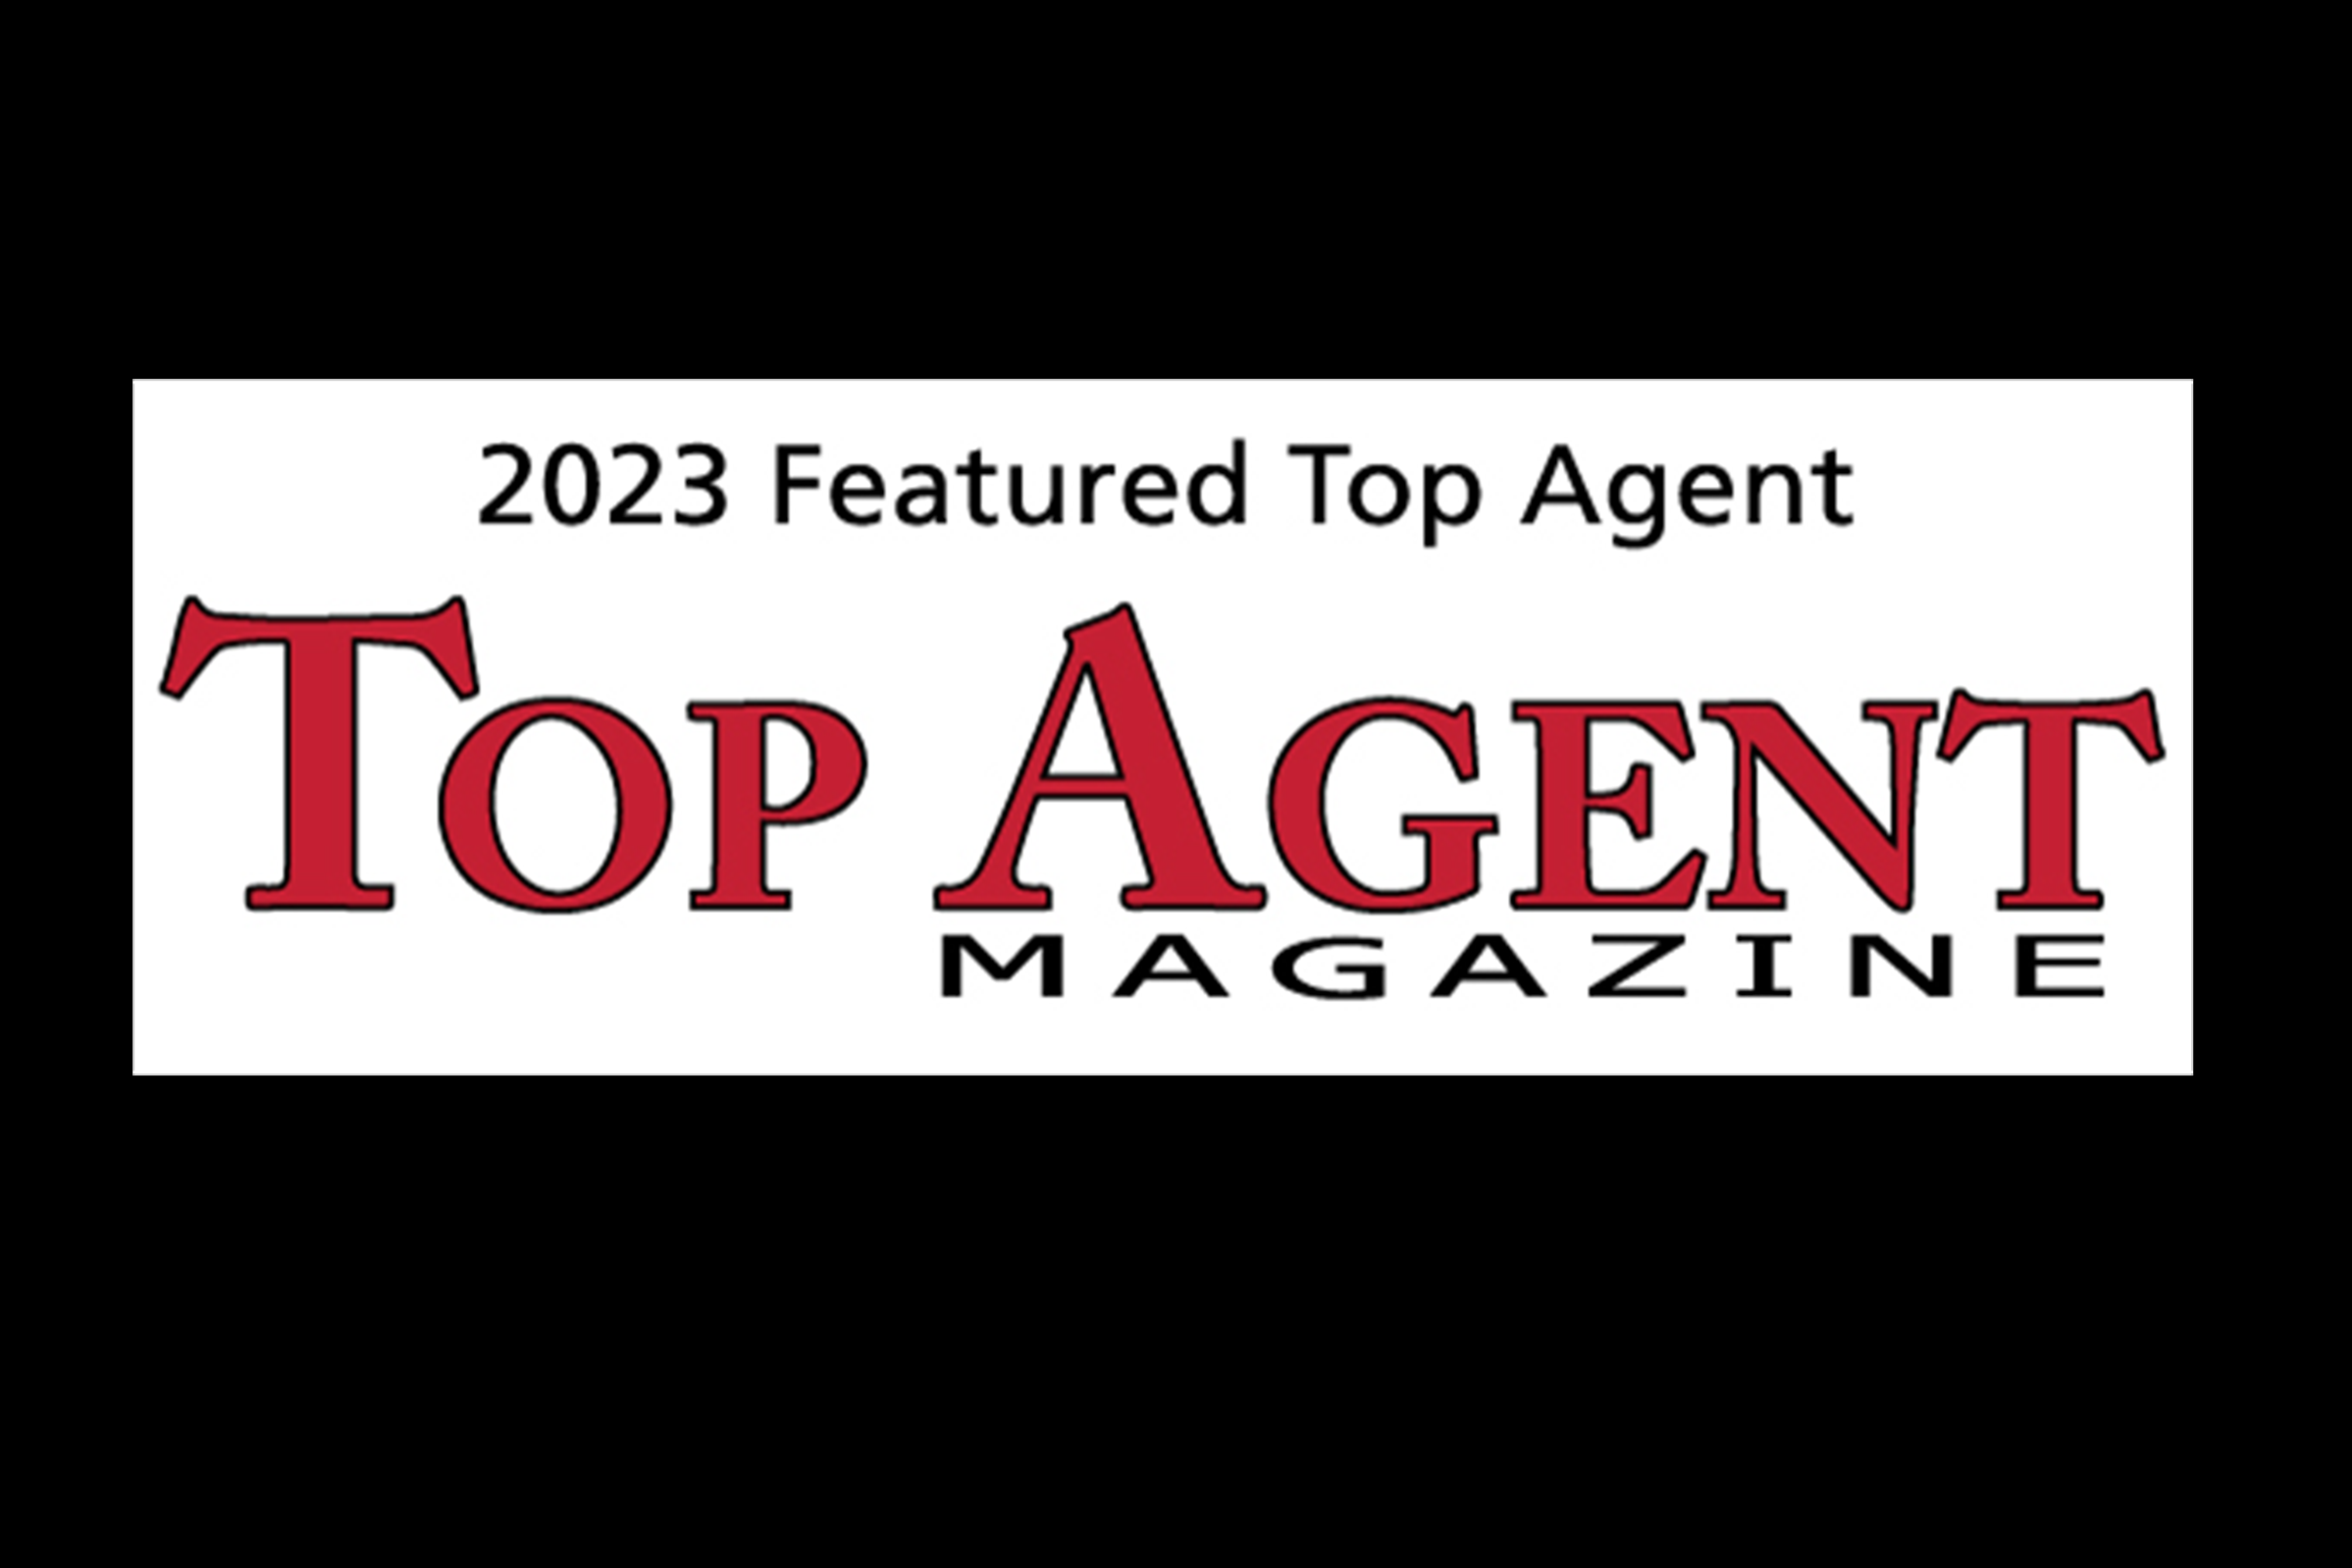 Featured Top Agent Magazine